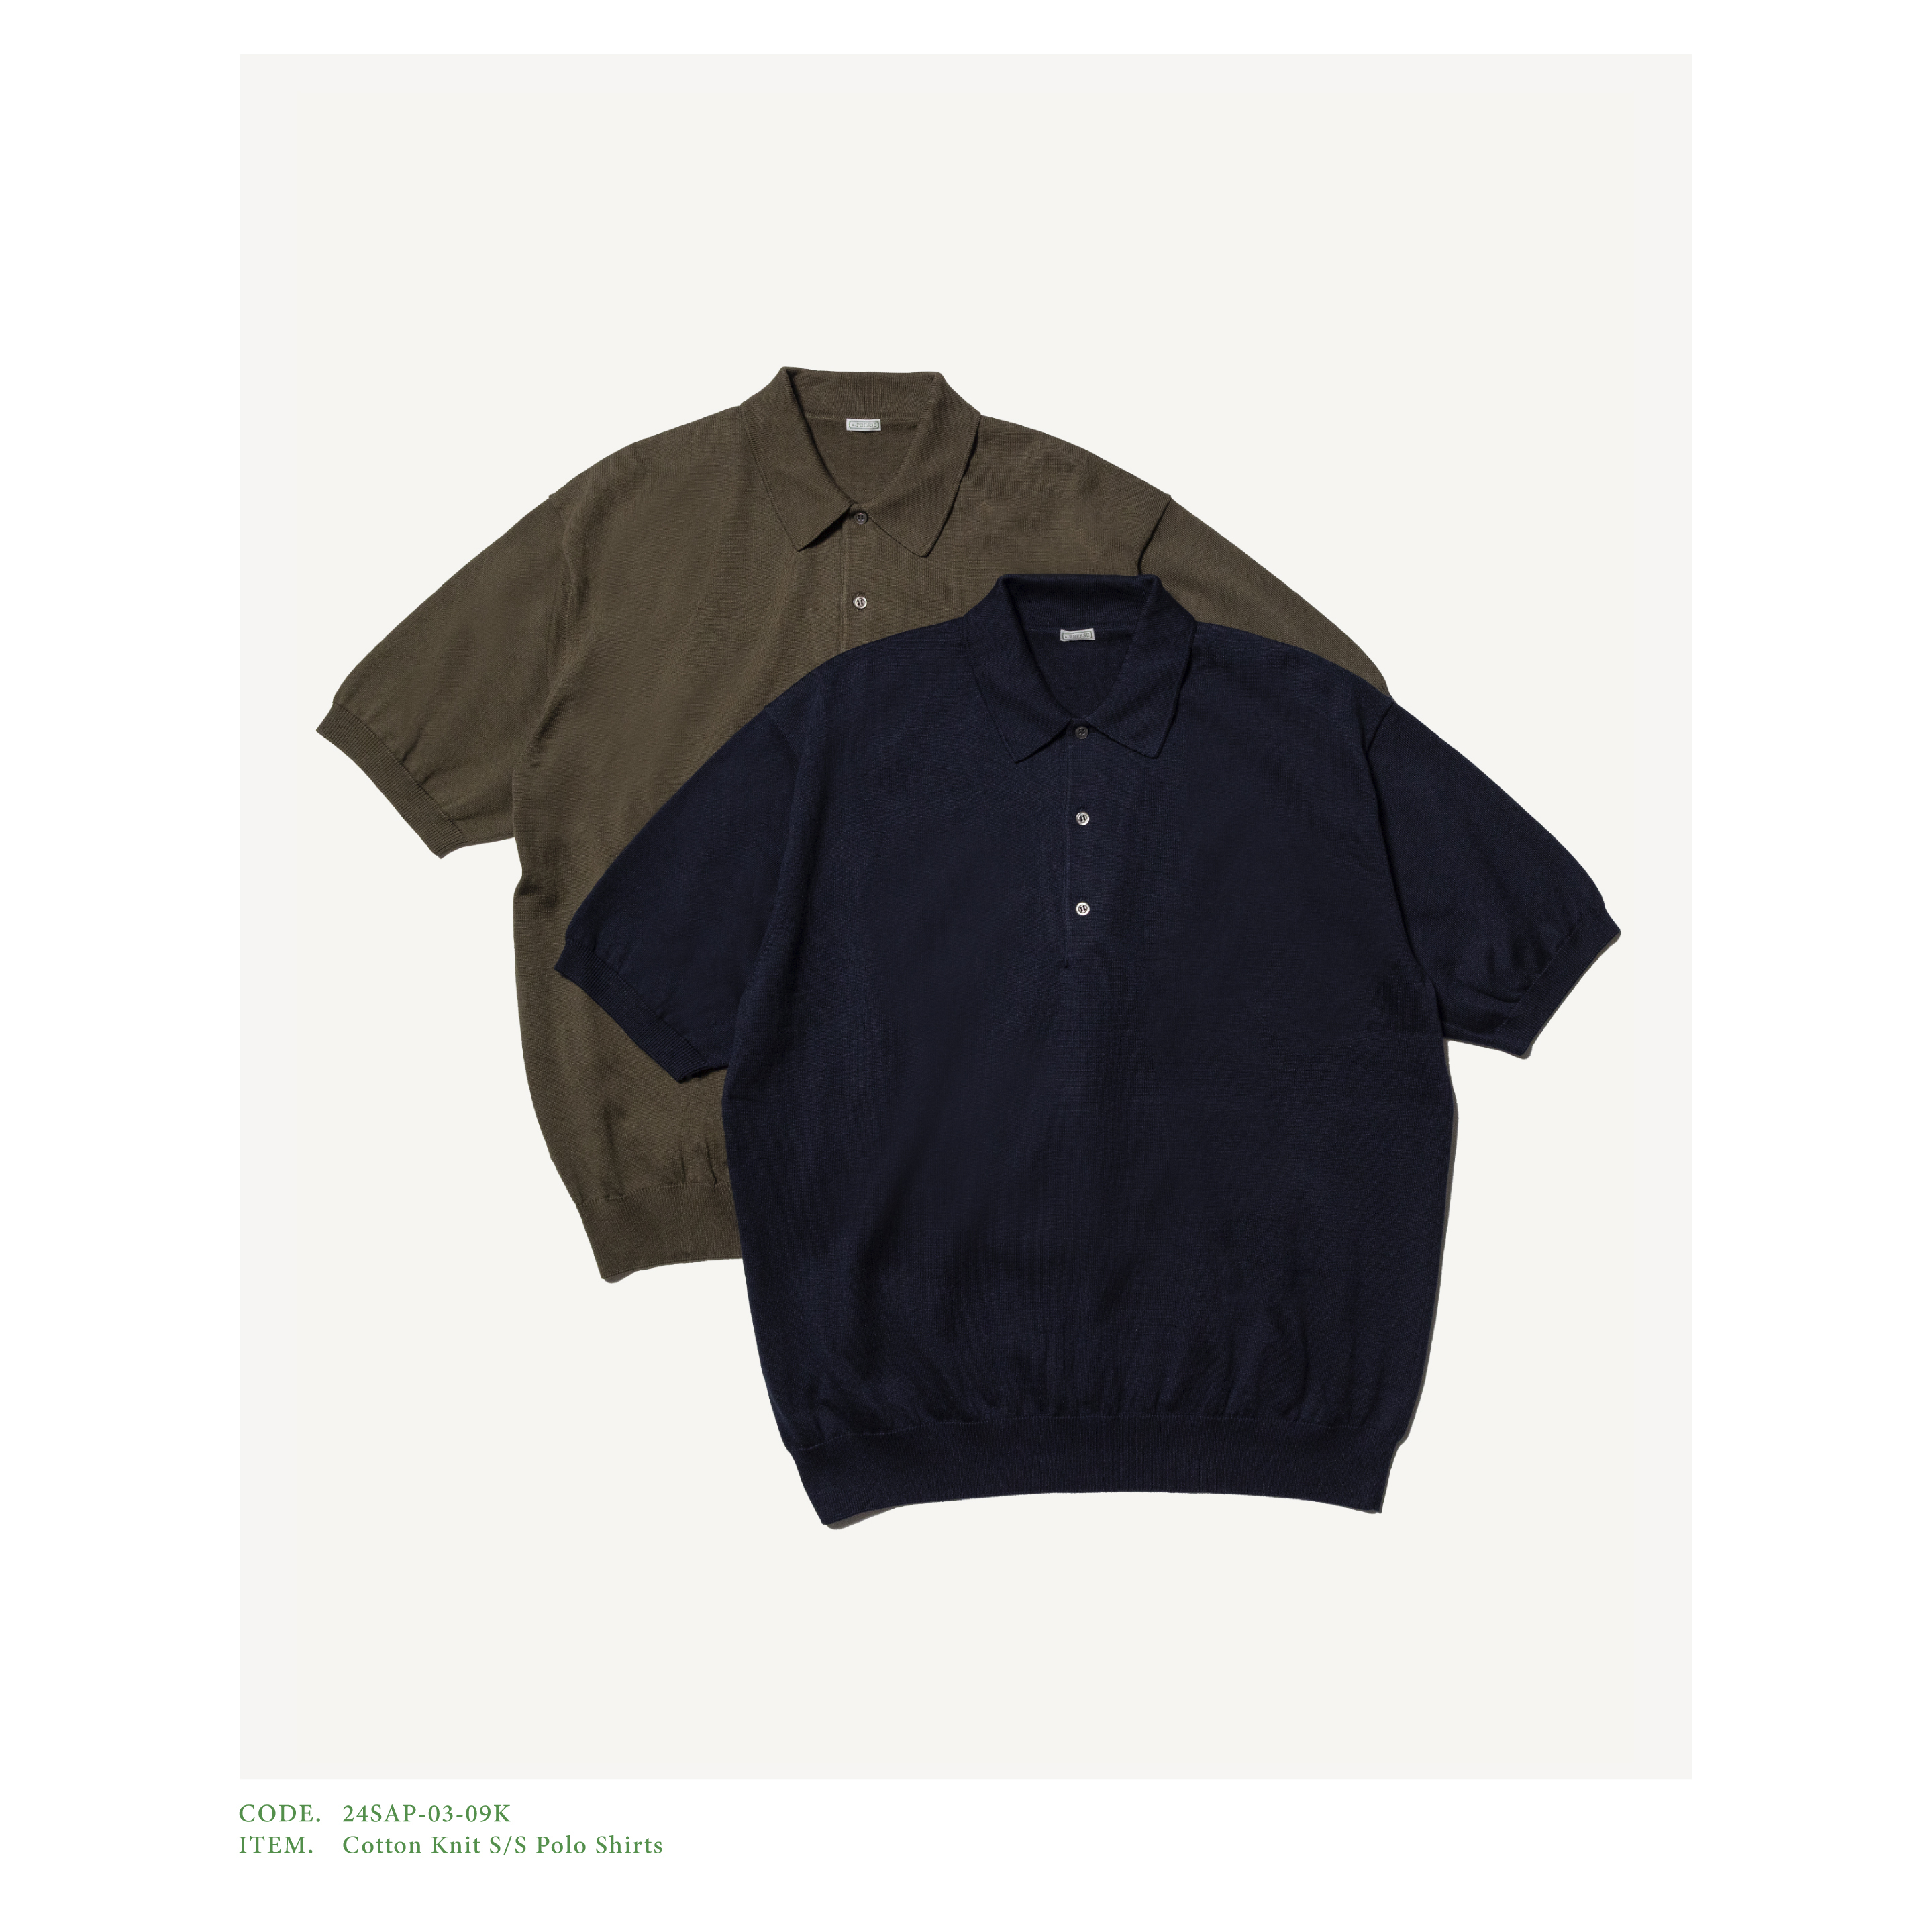 (24ss) A.PRESSE(A vbZ)/ Cotton Knit S/S Polo Shirts -NAVY,OLIVE- #24SAP-03-09K(1)